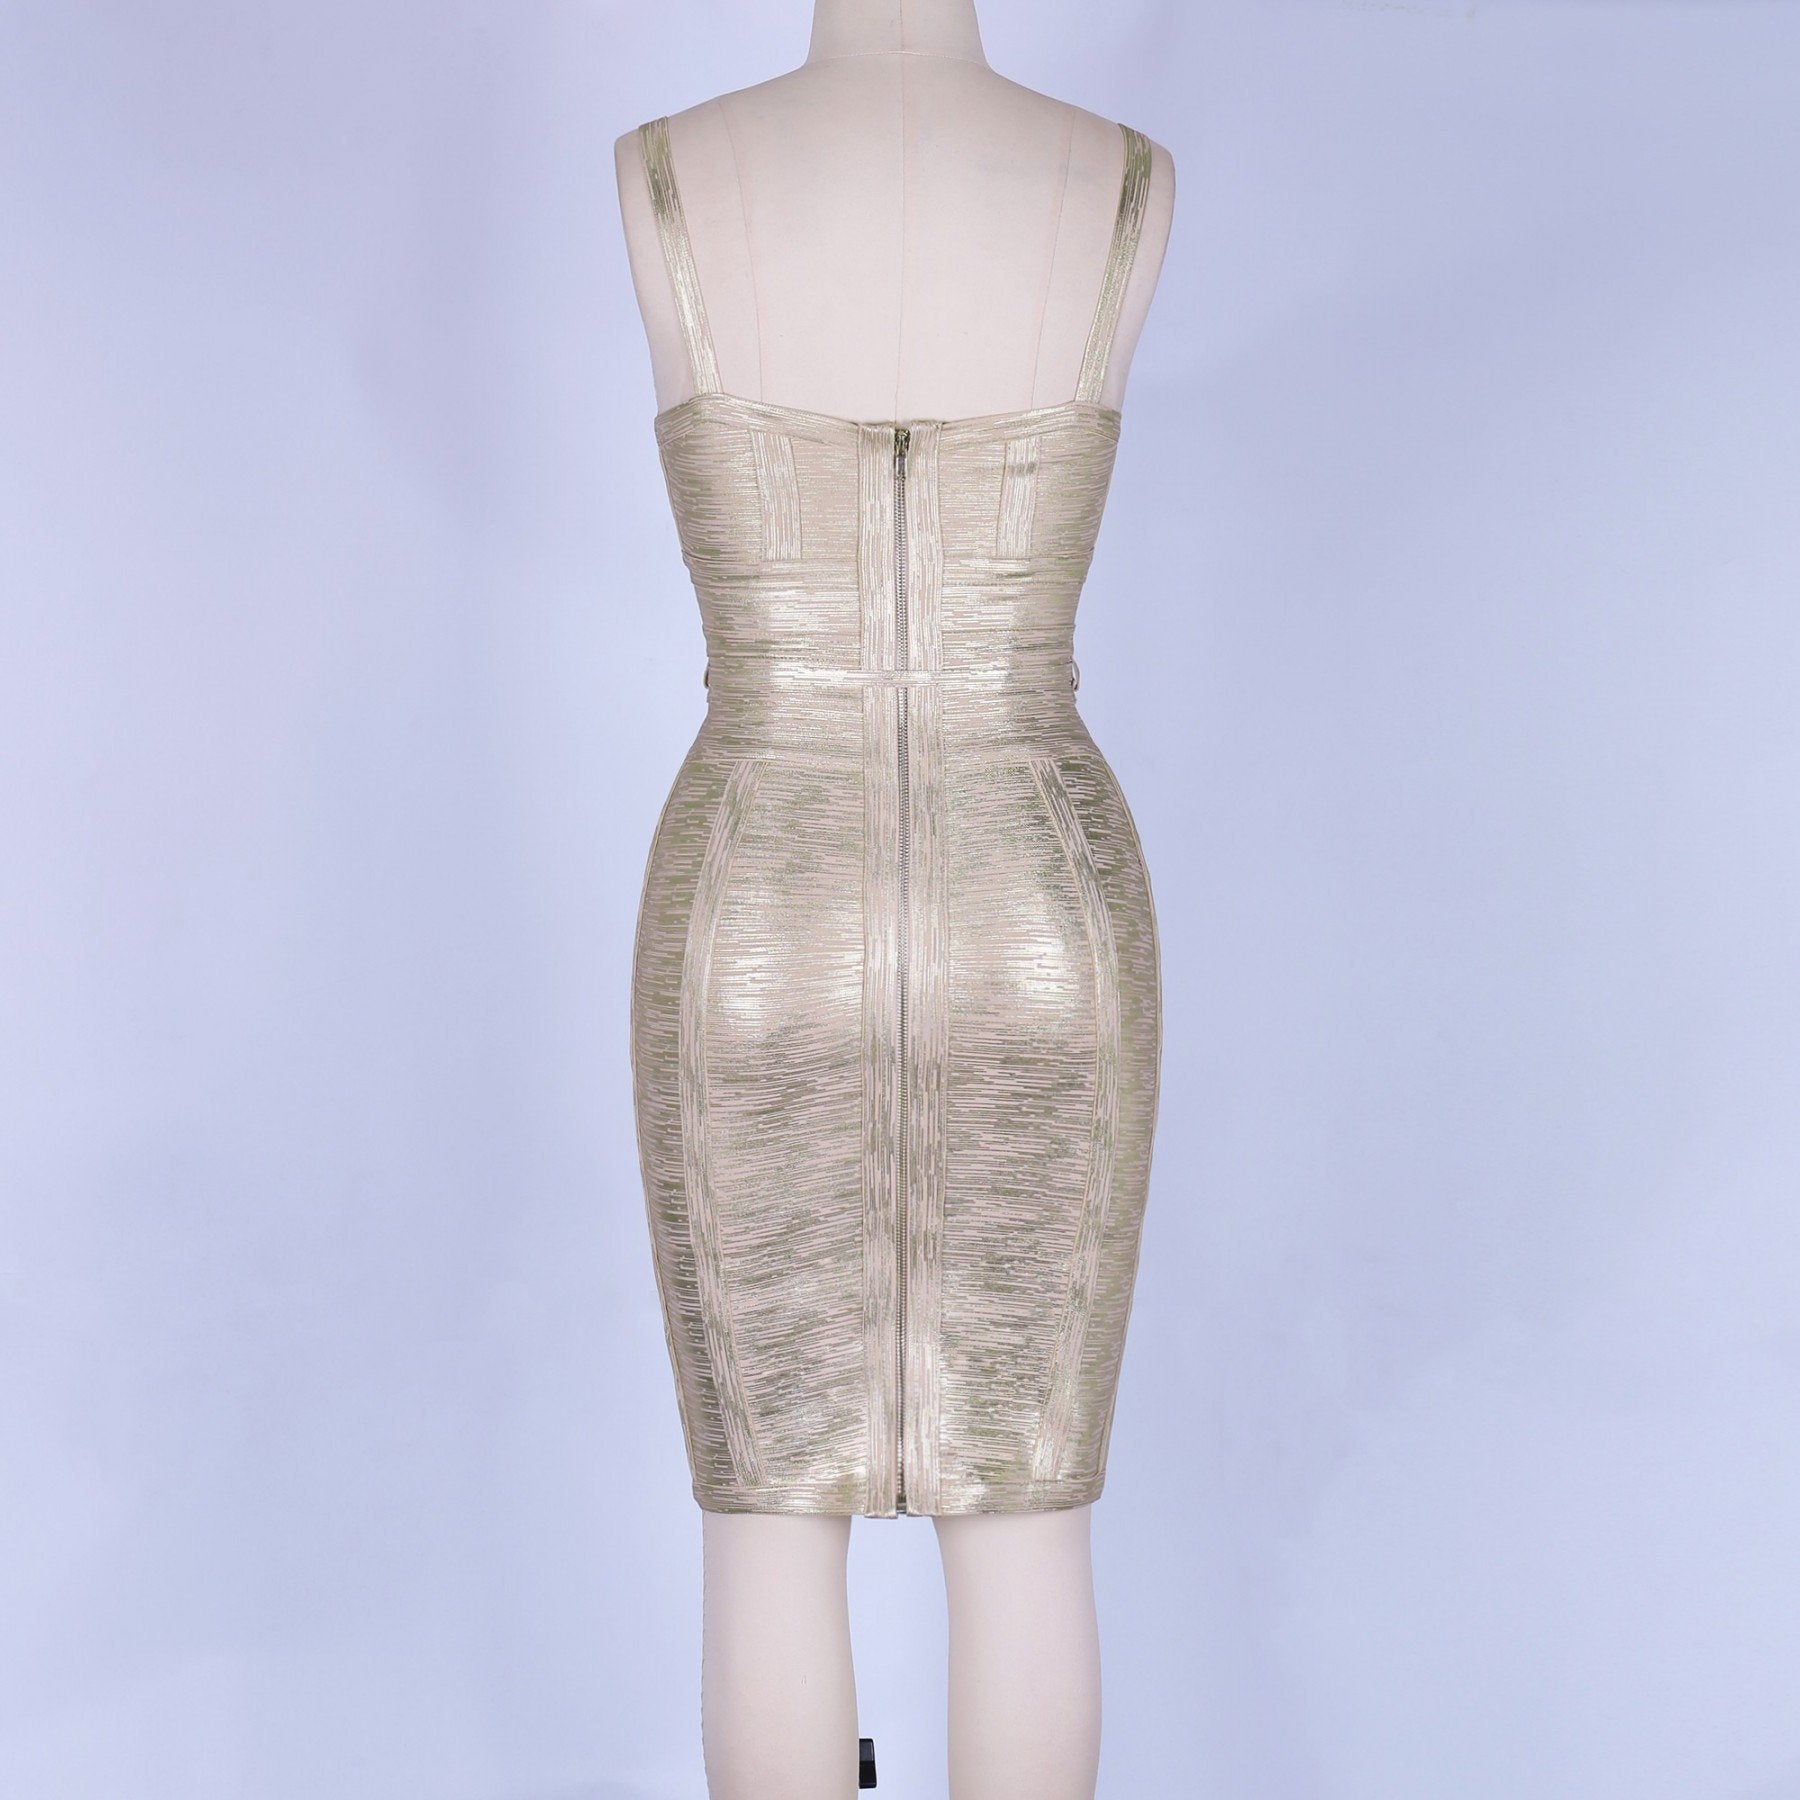 Strappy Sleeveless Lace Up Mini Bandage Dress FDZ003 6 in wolddress